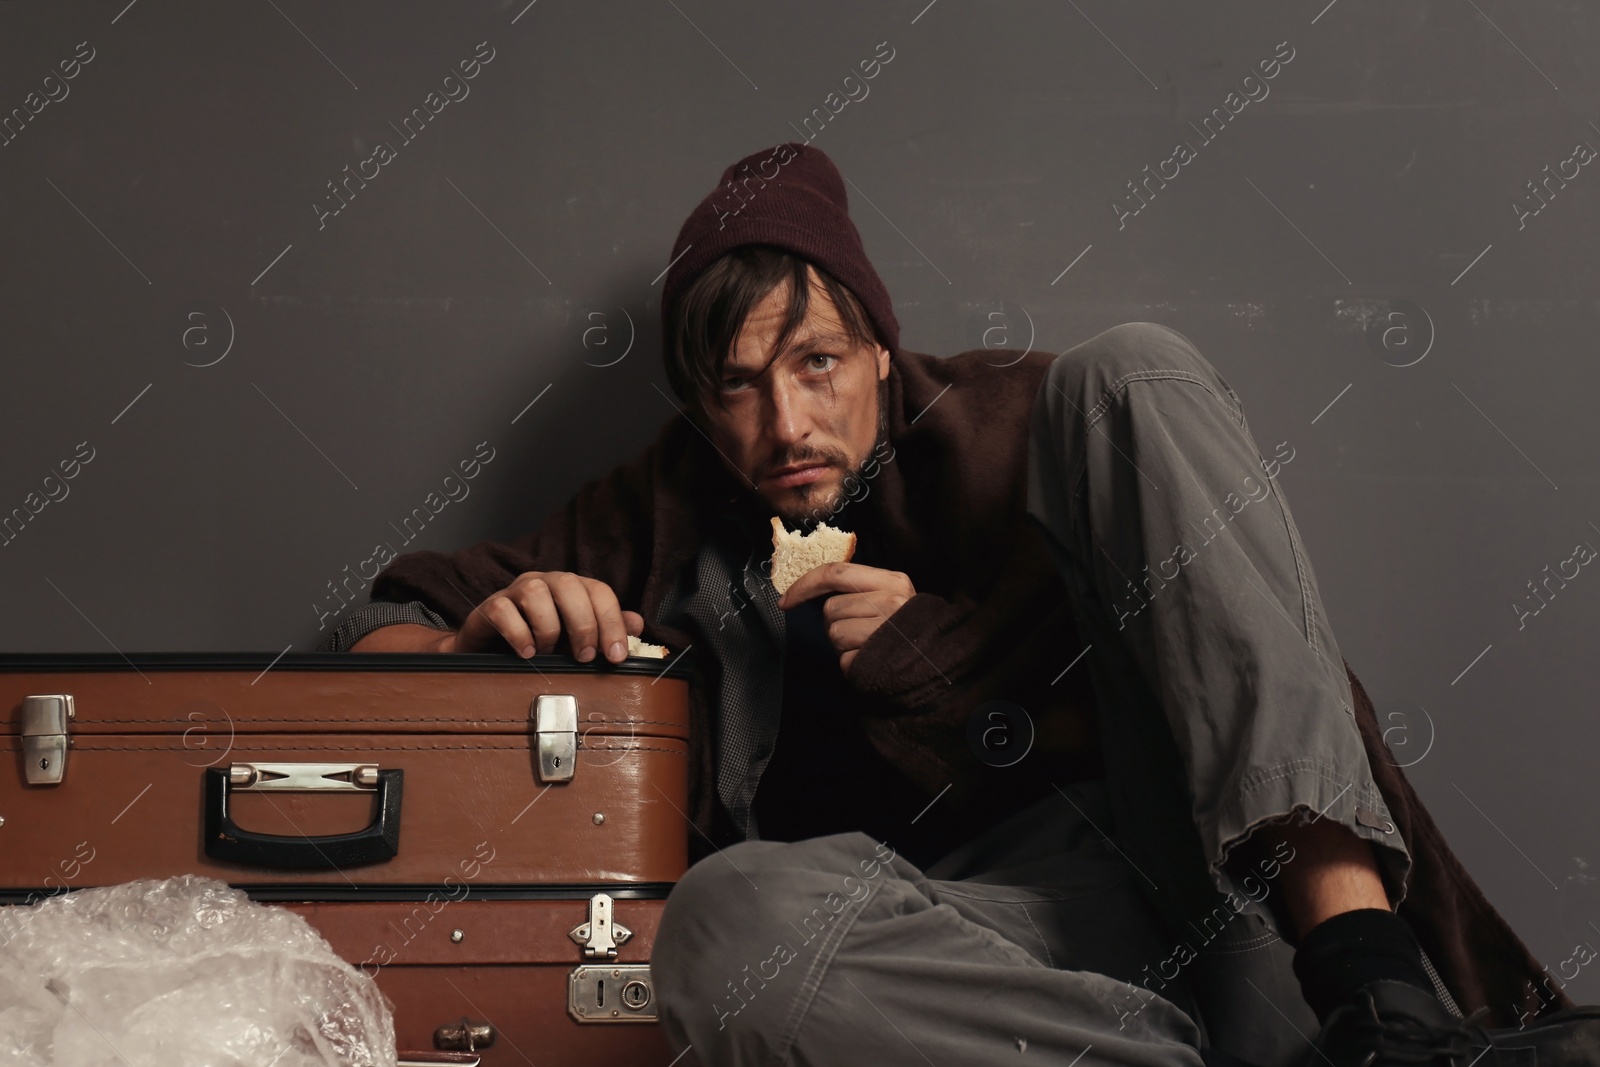 Photo of Poor homeless man eating near dark wall